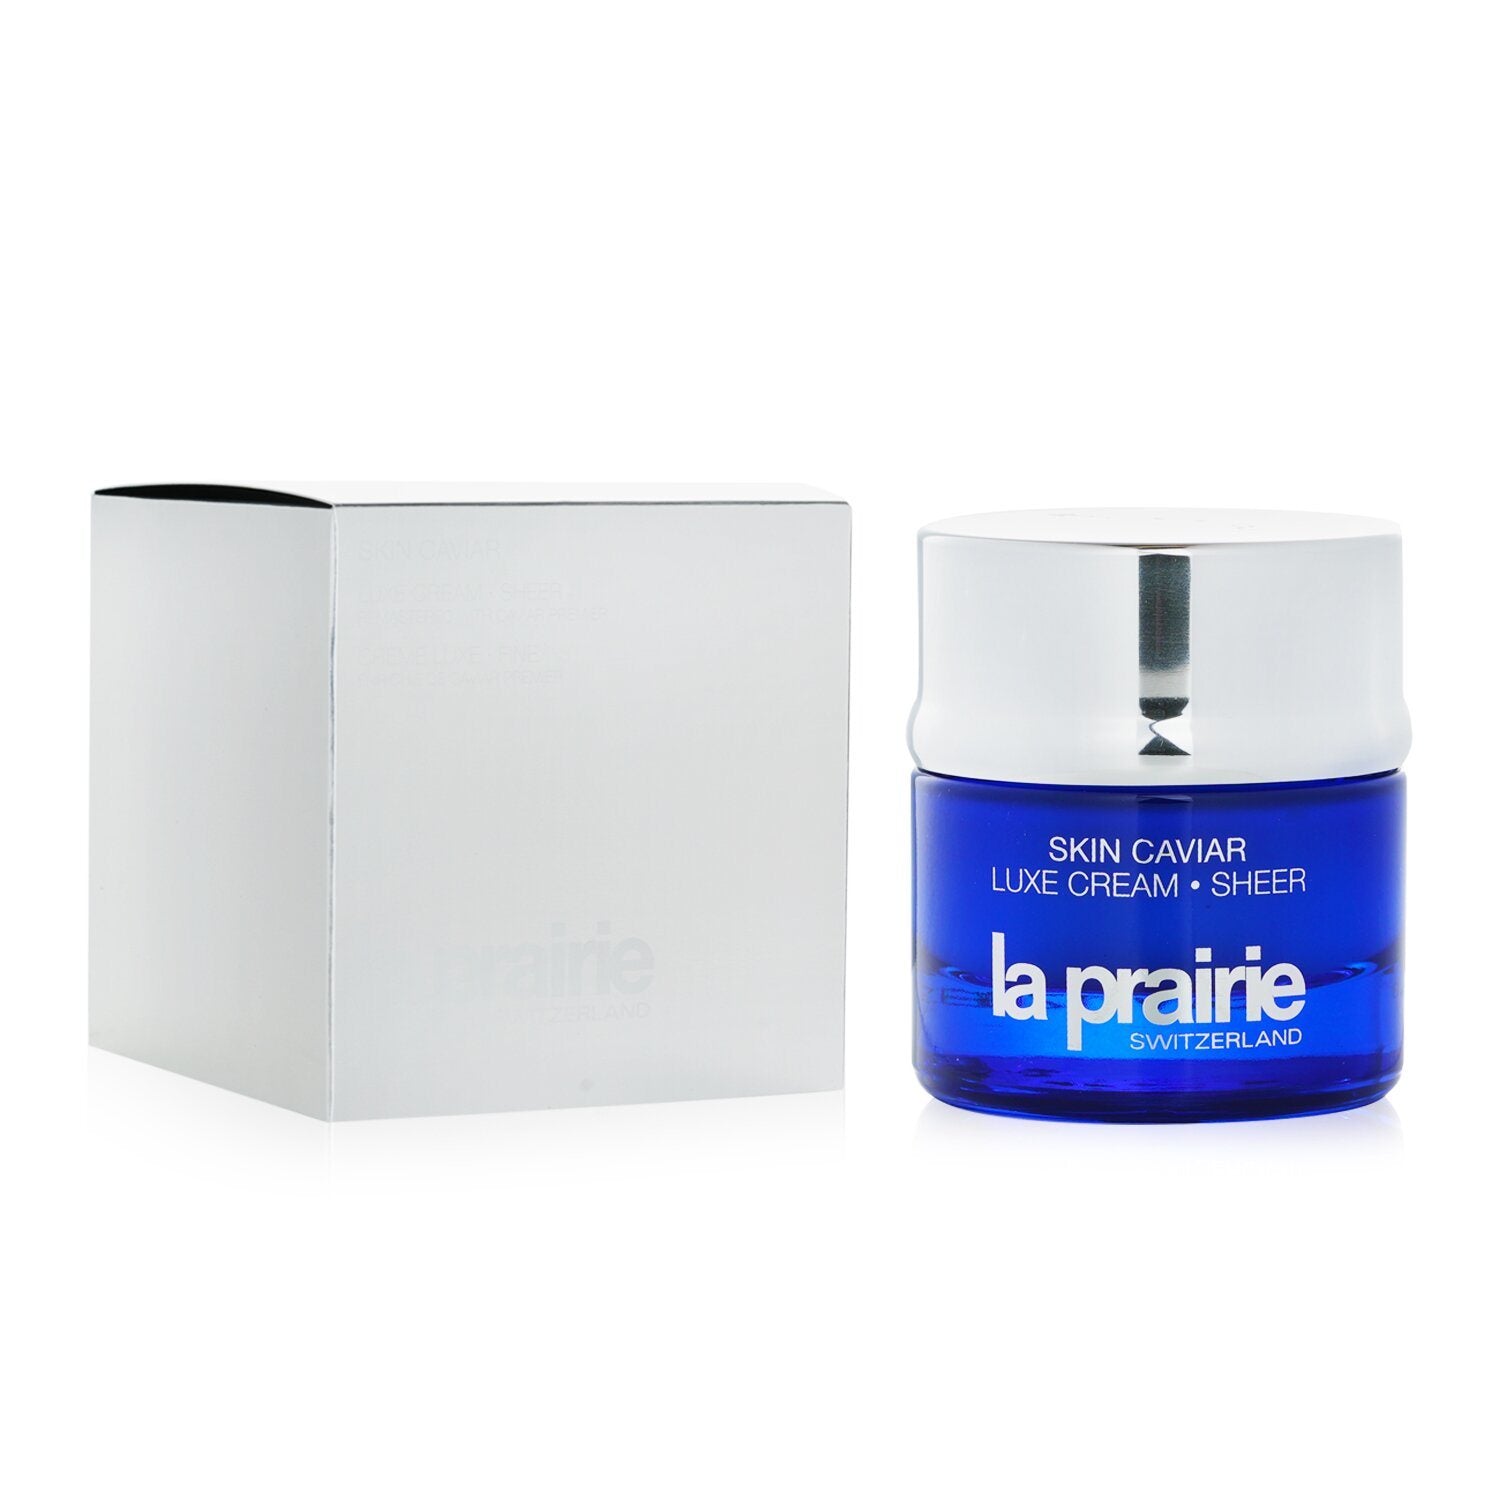 LA PRAIRIE - Skin Caviar Luxe Cream Sheer 081597 50ml/1.7oz 3P's Inclusive Beauty